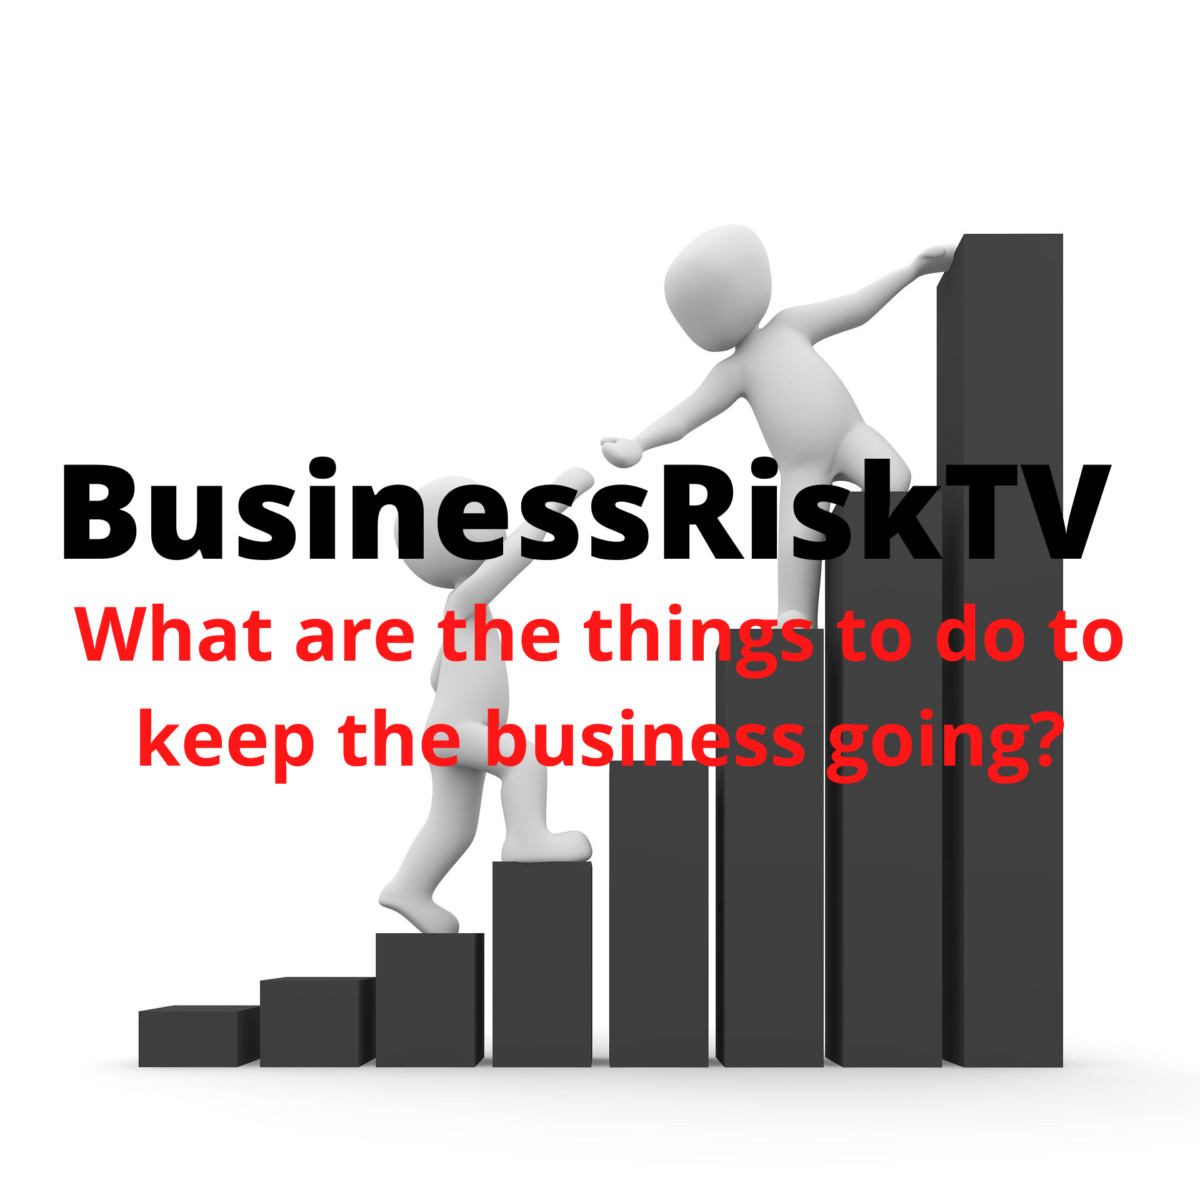 Informed business risk taking